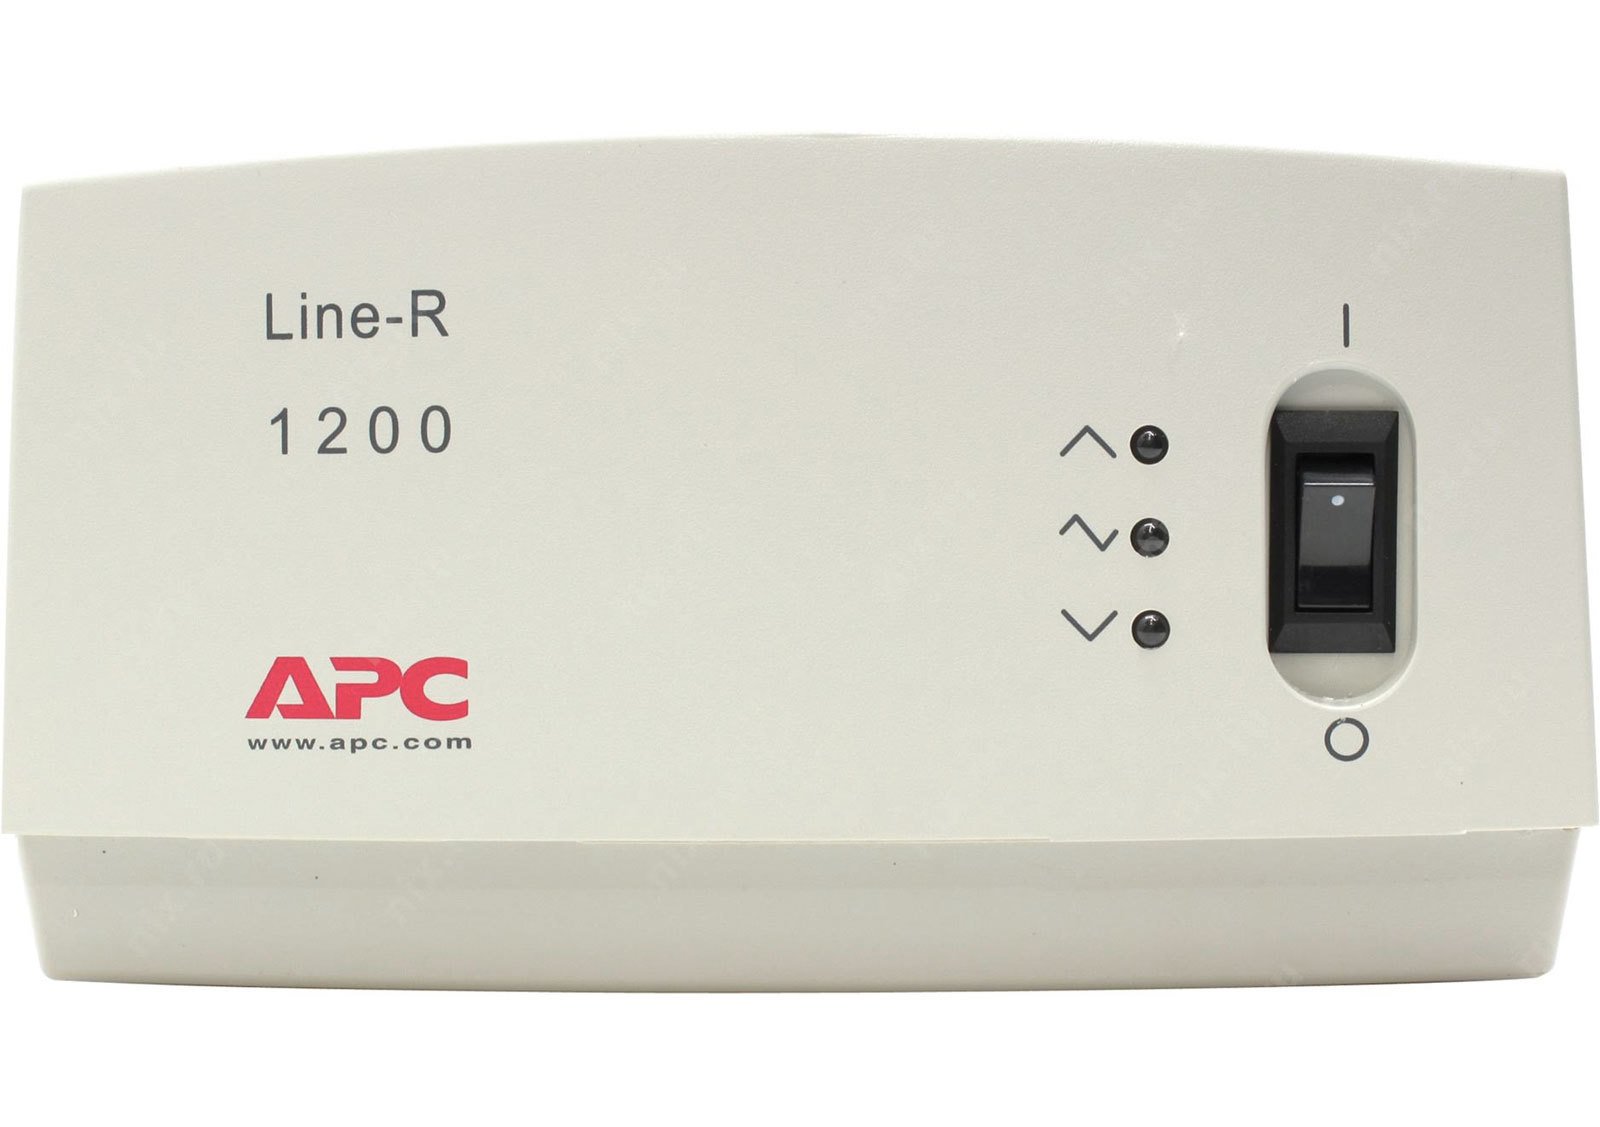 Лайн 1200. APC line-r 1200. APC line-r 1200va. Стабилизатор напряжения APC 1200. Стабилизатор напряжения APC line-r.